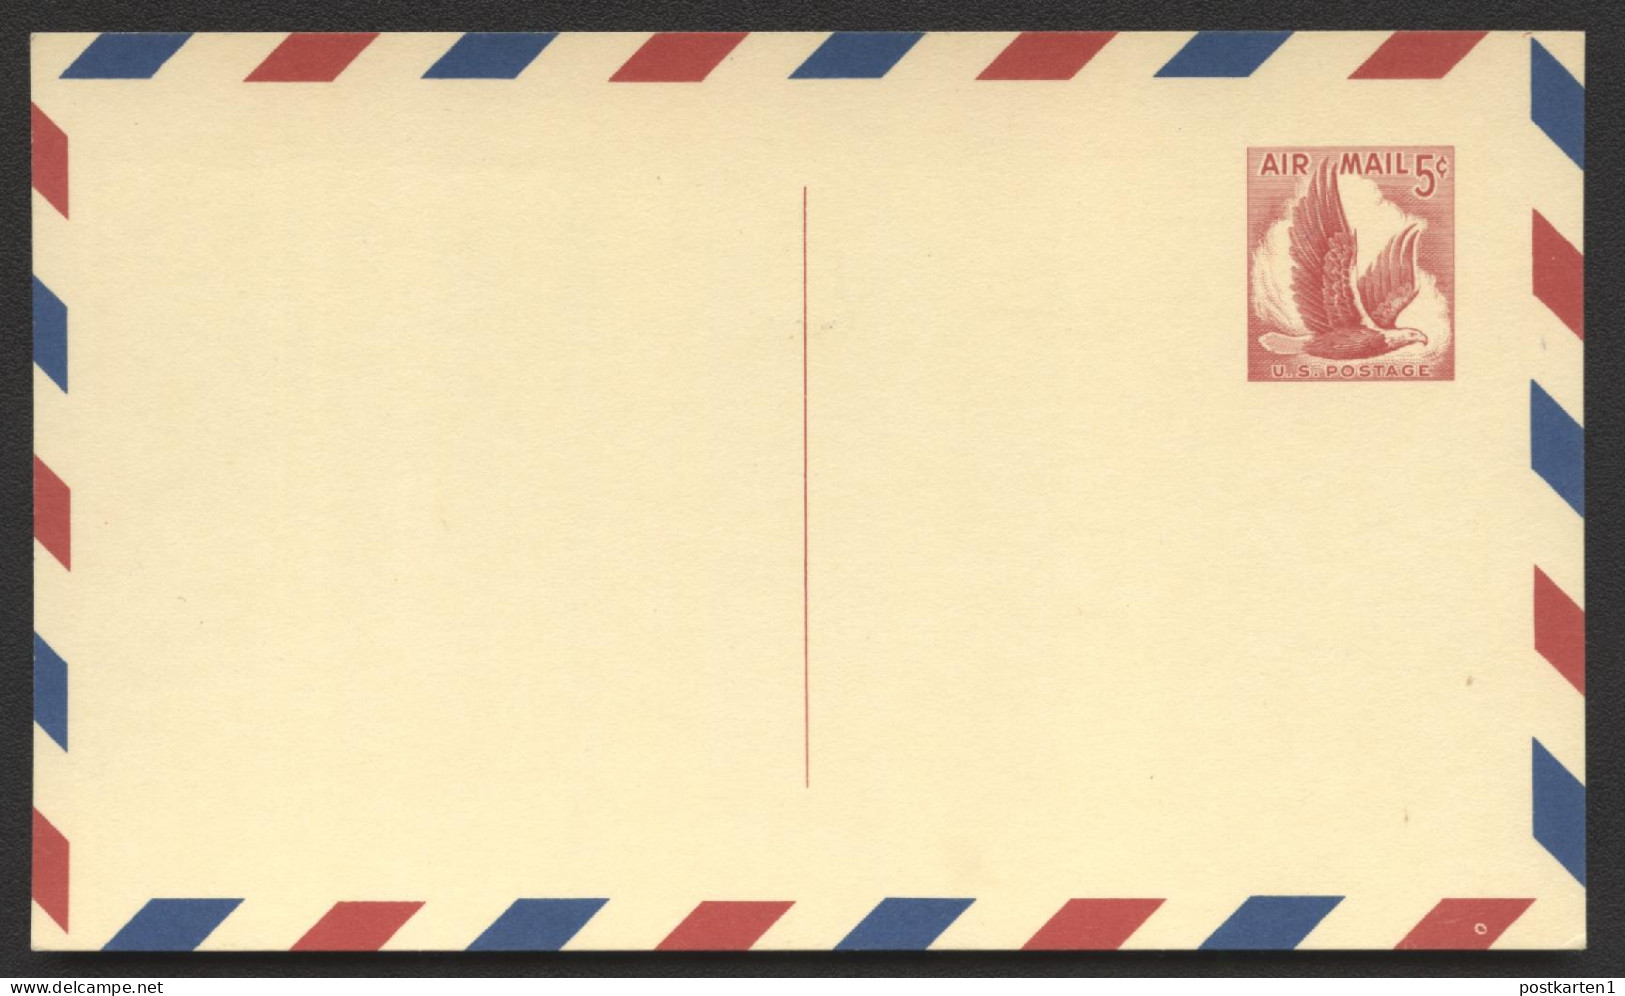 UXC3 Air Mail Postal Card Type C Mint Vf 1960 $7.50 - 1941-60